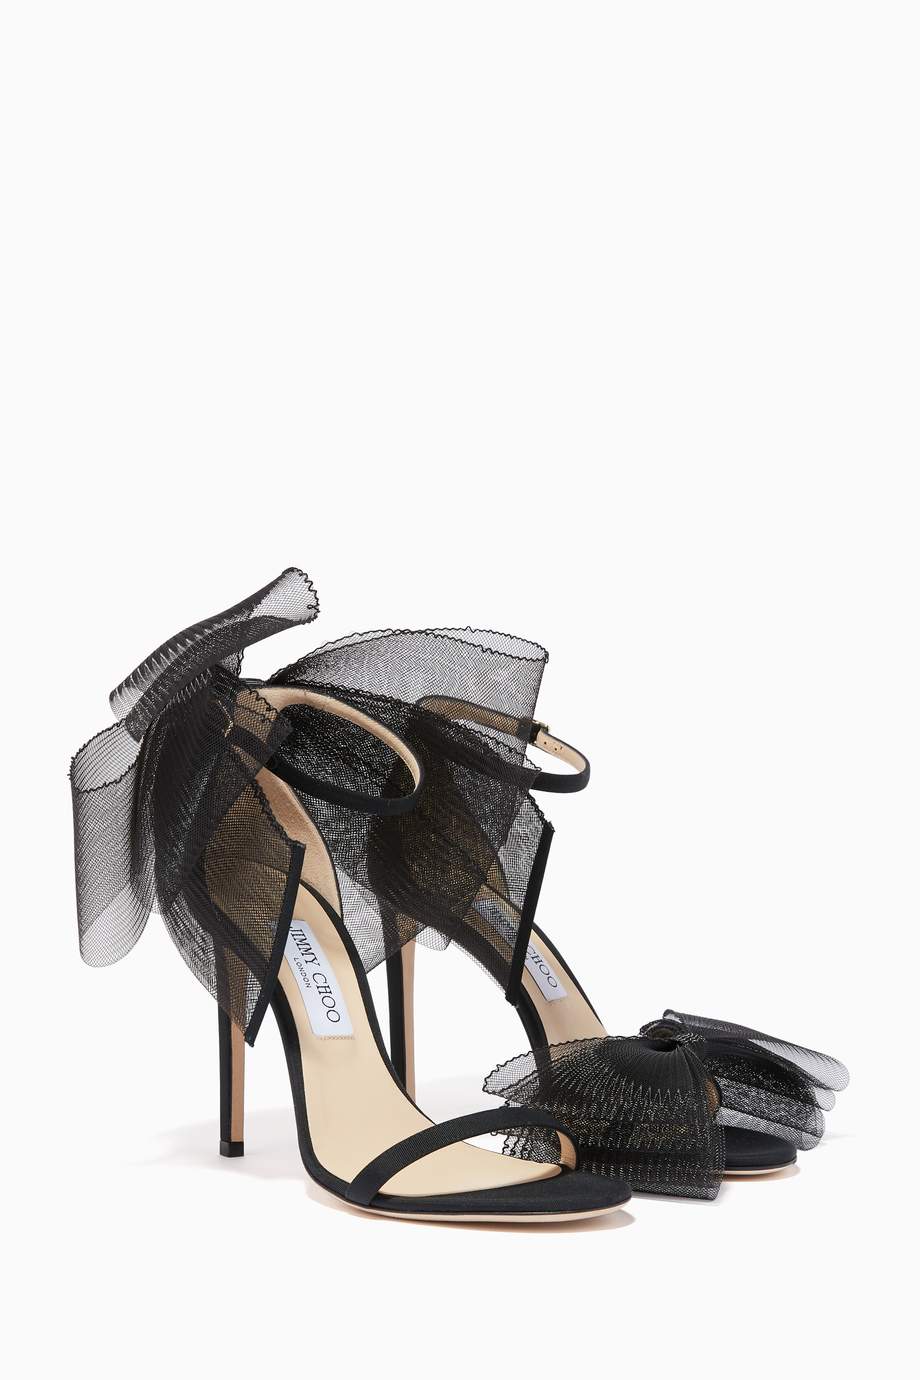 Shop Jimmy Choo Black Aveline 100 Asymmetric Sandals for Women | Ounass UAE